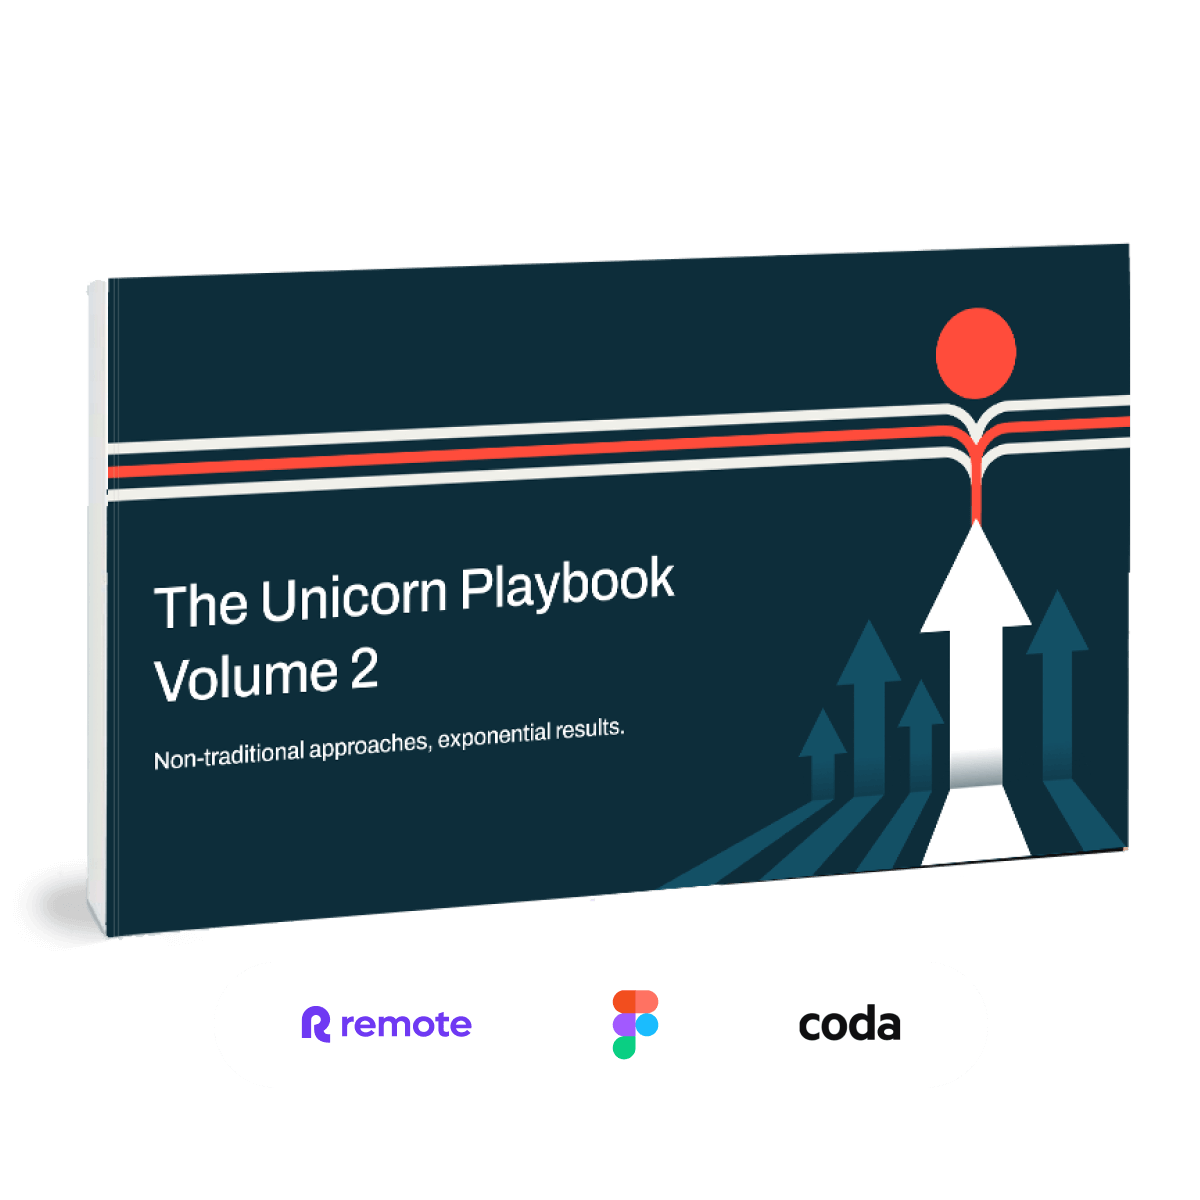 The Unicorn Playbook Volume 2